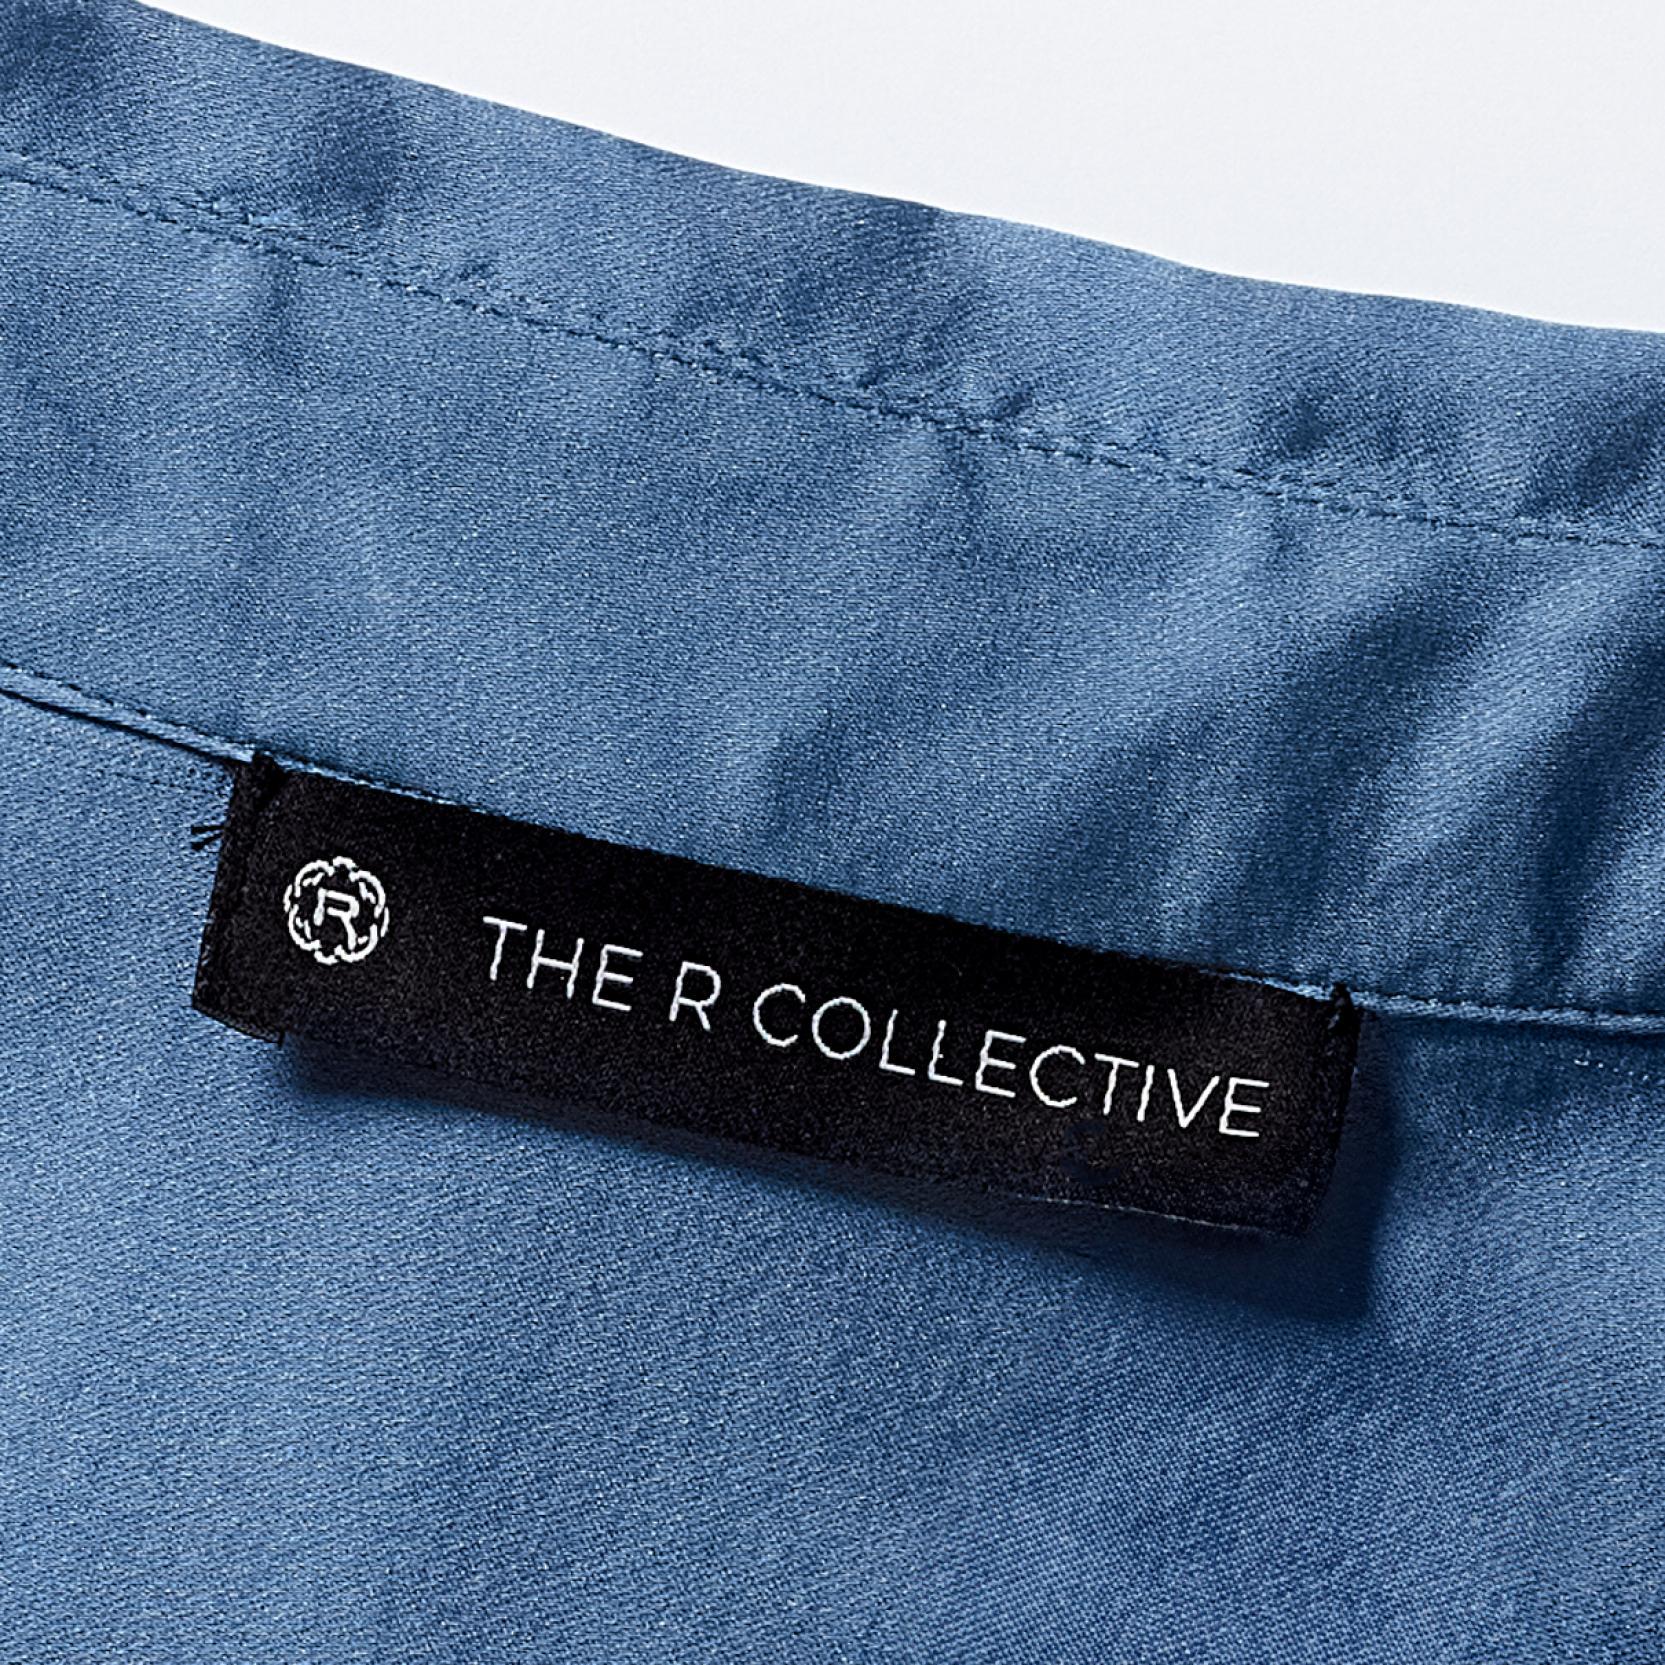 R Collective interior neck woven label